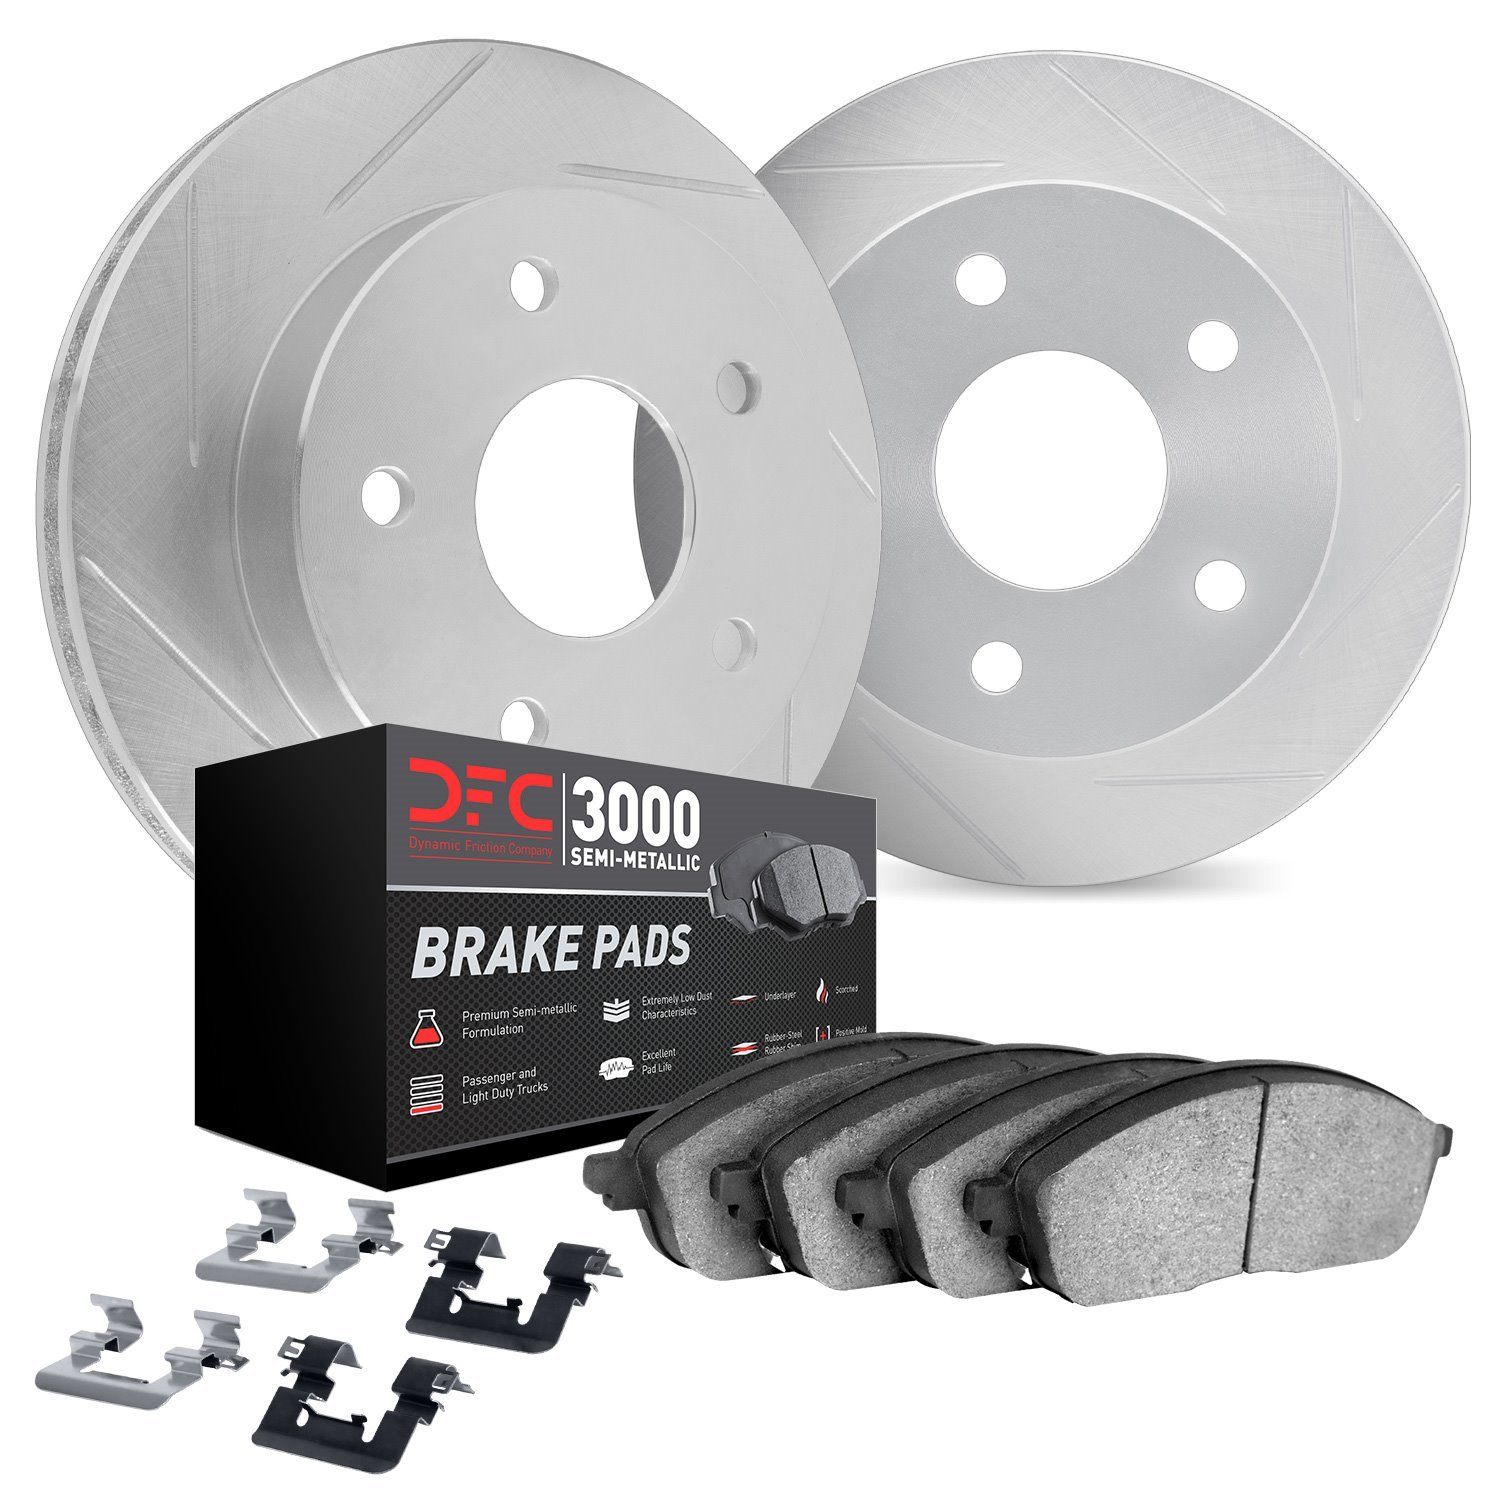 5112-54188 Slotted Brake Rotors with 3000-Series Semi-Metallic Brake Pads Kit & Hardware [Silver], 2007-2015 Ford/Lincoln/Mercur